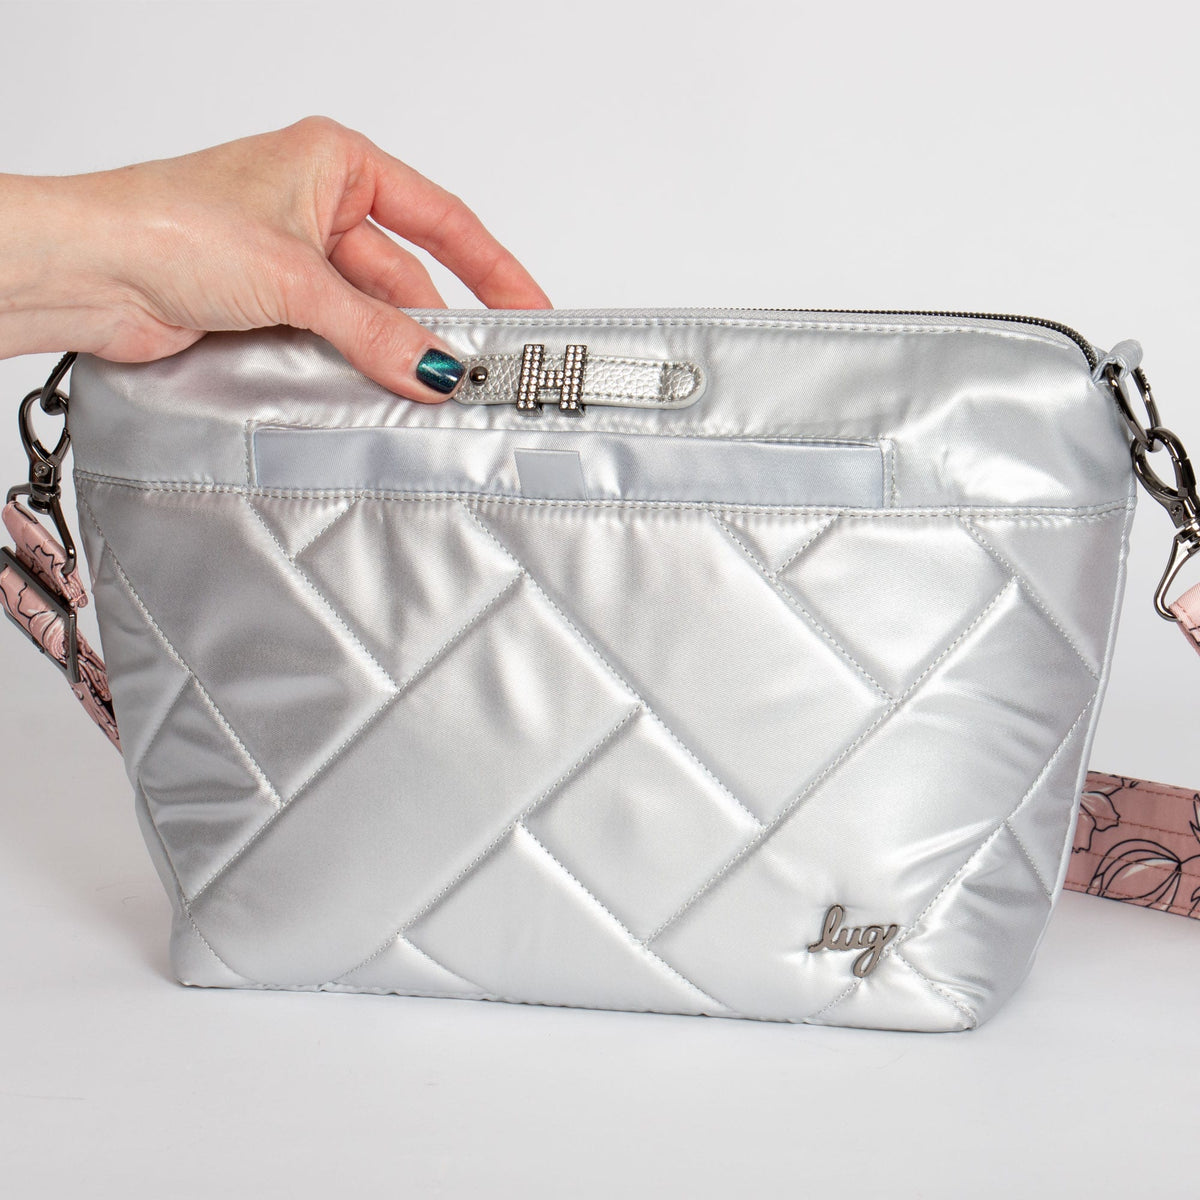 Louis Vuitton Letter Charms Bag Accessory / Charm